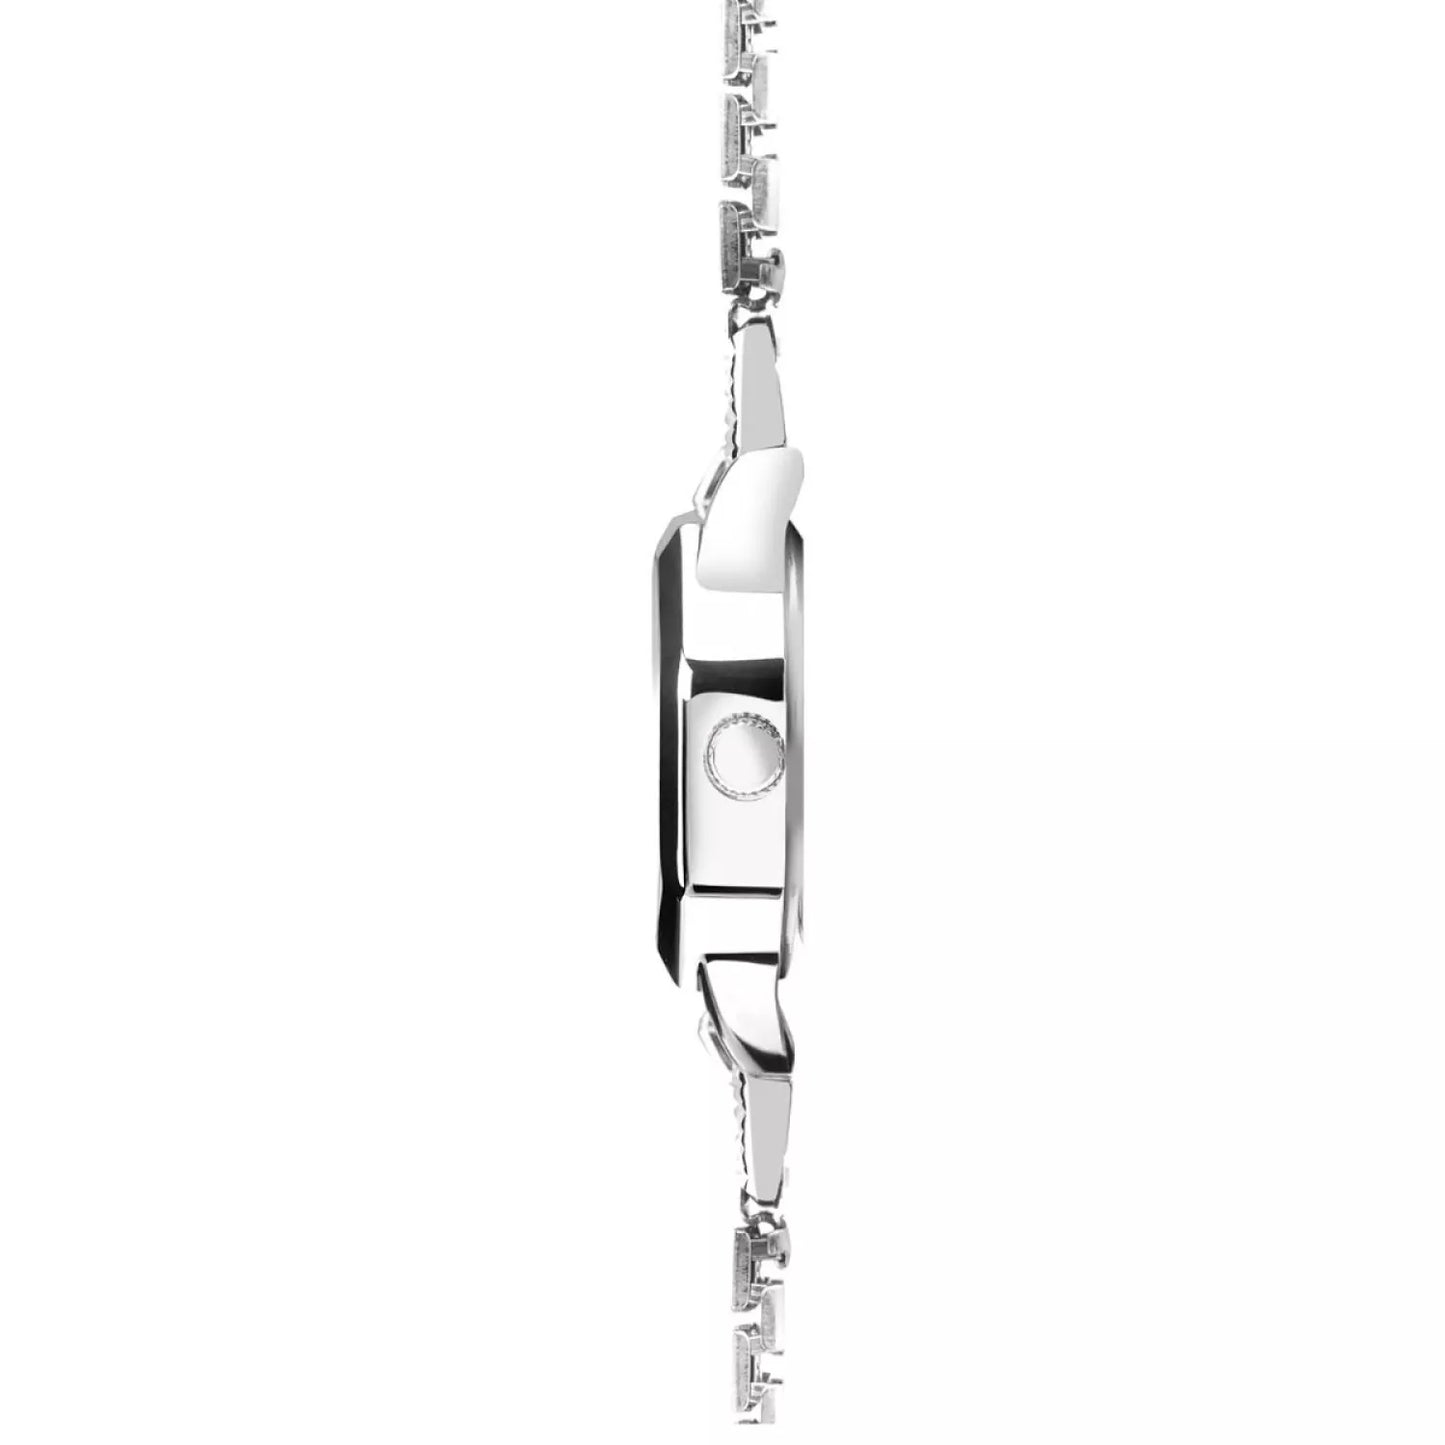 40496 Sekonda watch ladies silver plated expanding bracelet clear dial Arabic